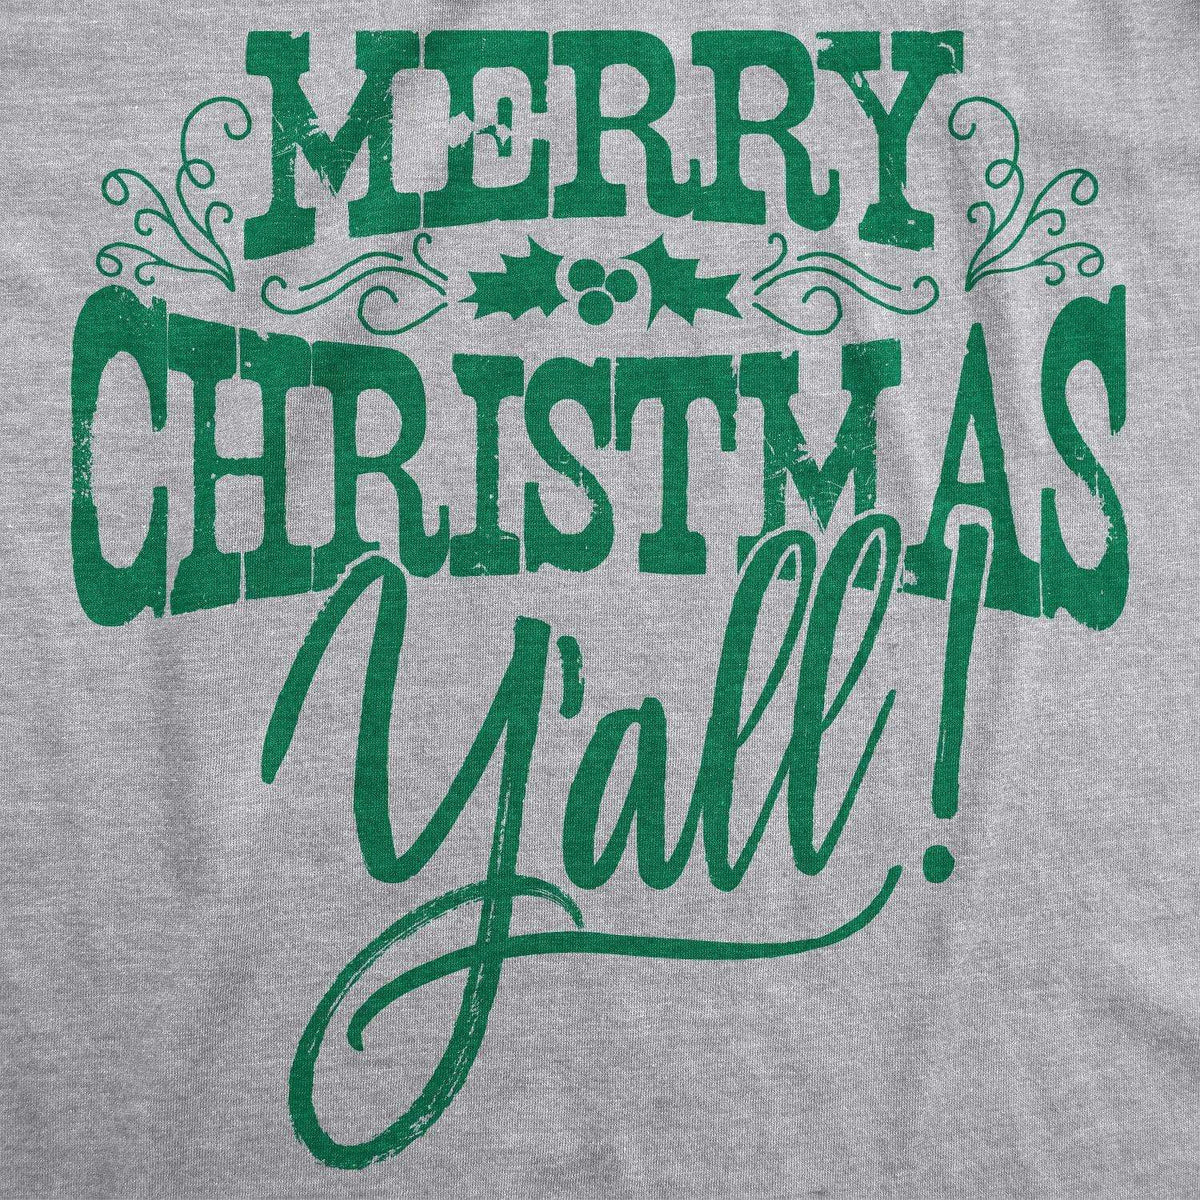 Merry Christmas Y&#39;all Men&#39;s Tshirt - Crazy Dog T-Shirts